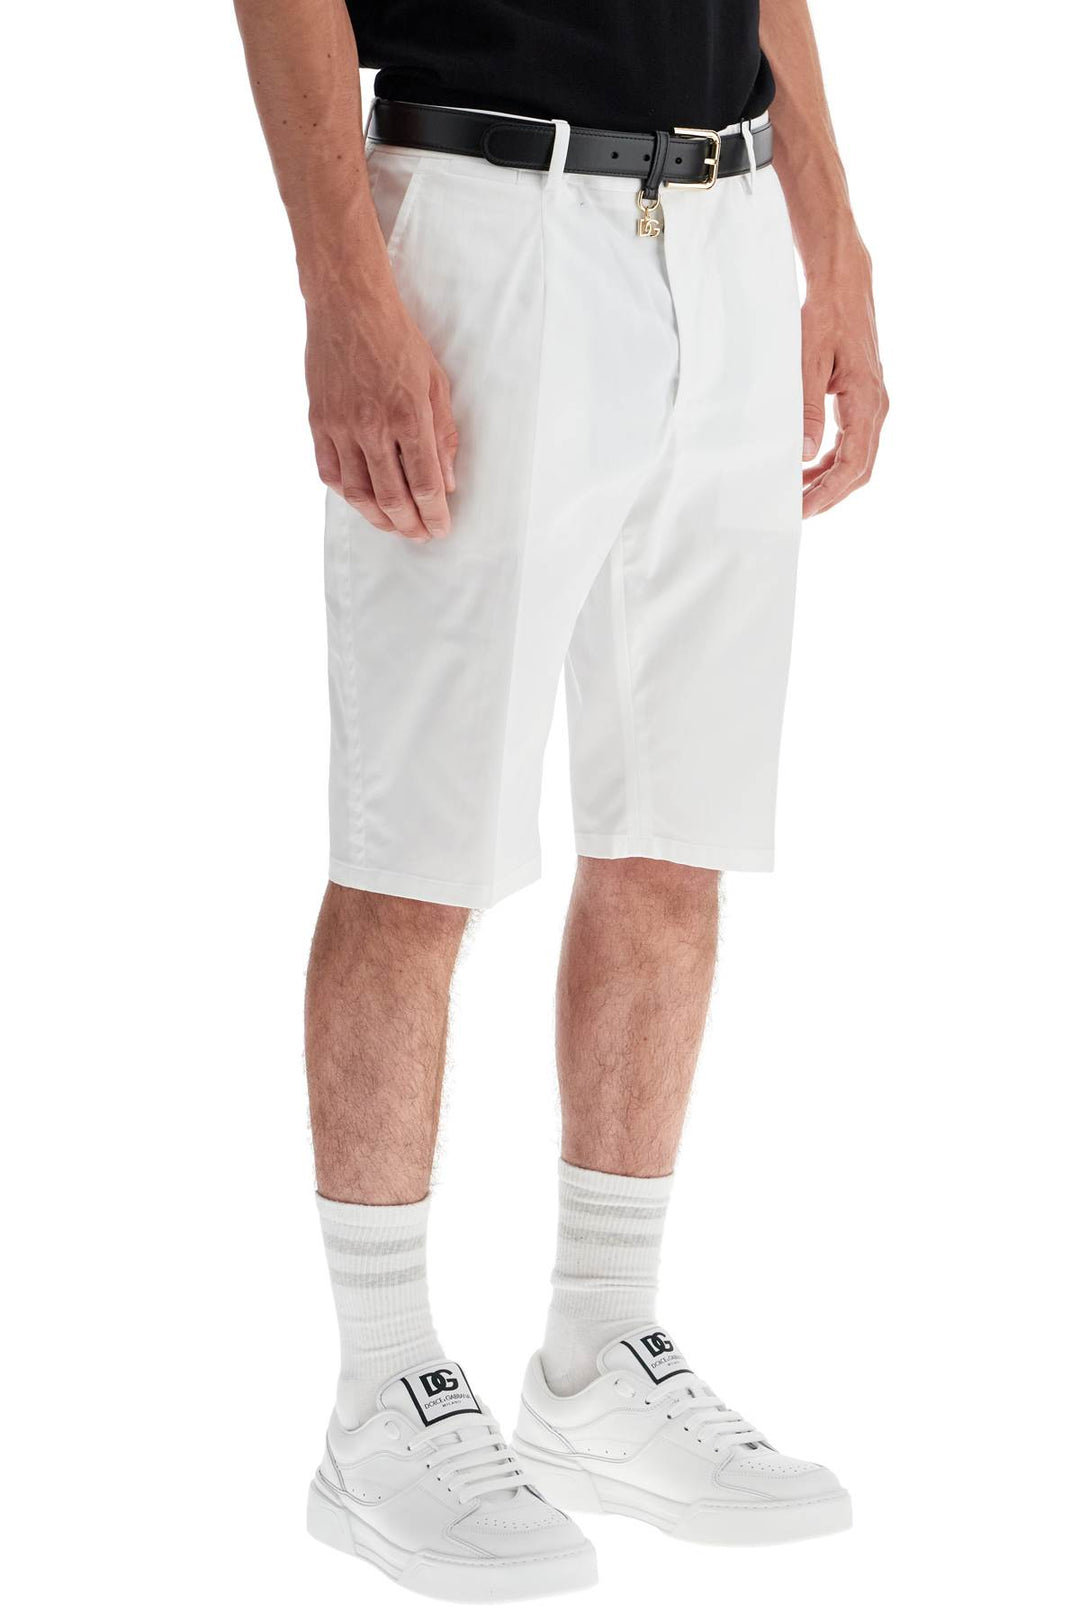 Dolce & Gabbana Stretch Cotton Bermuda Shorts   White